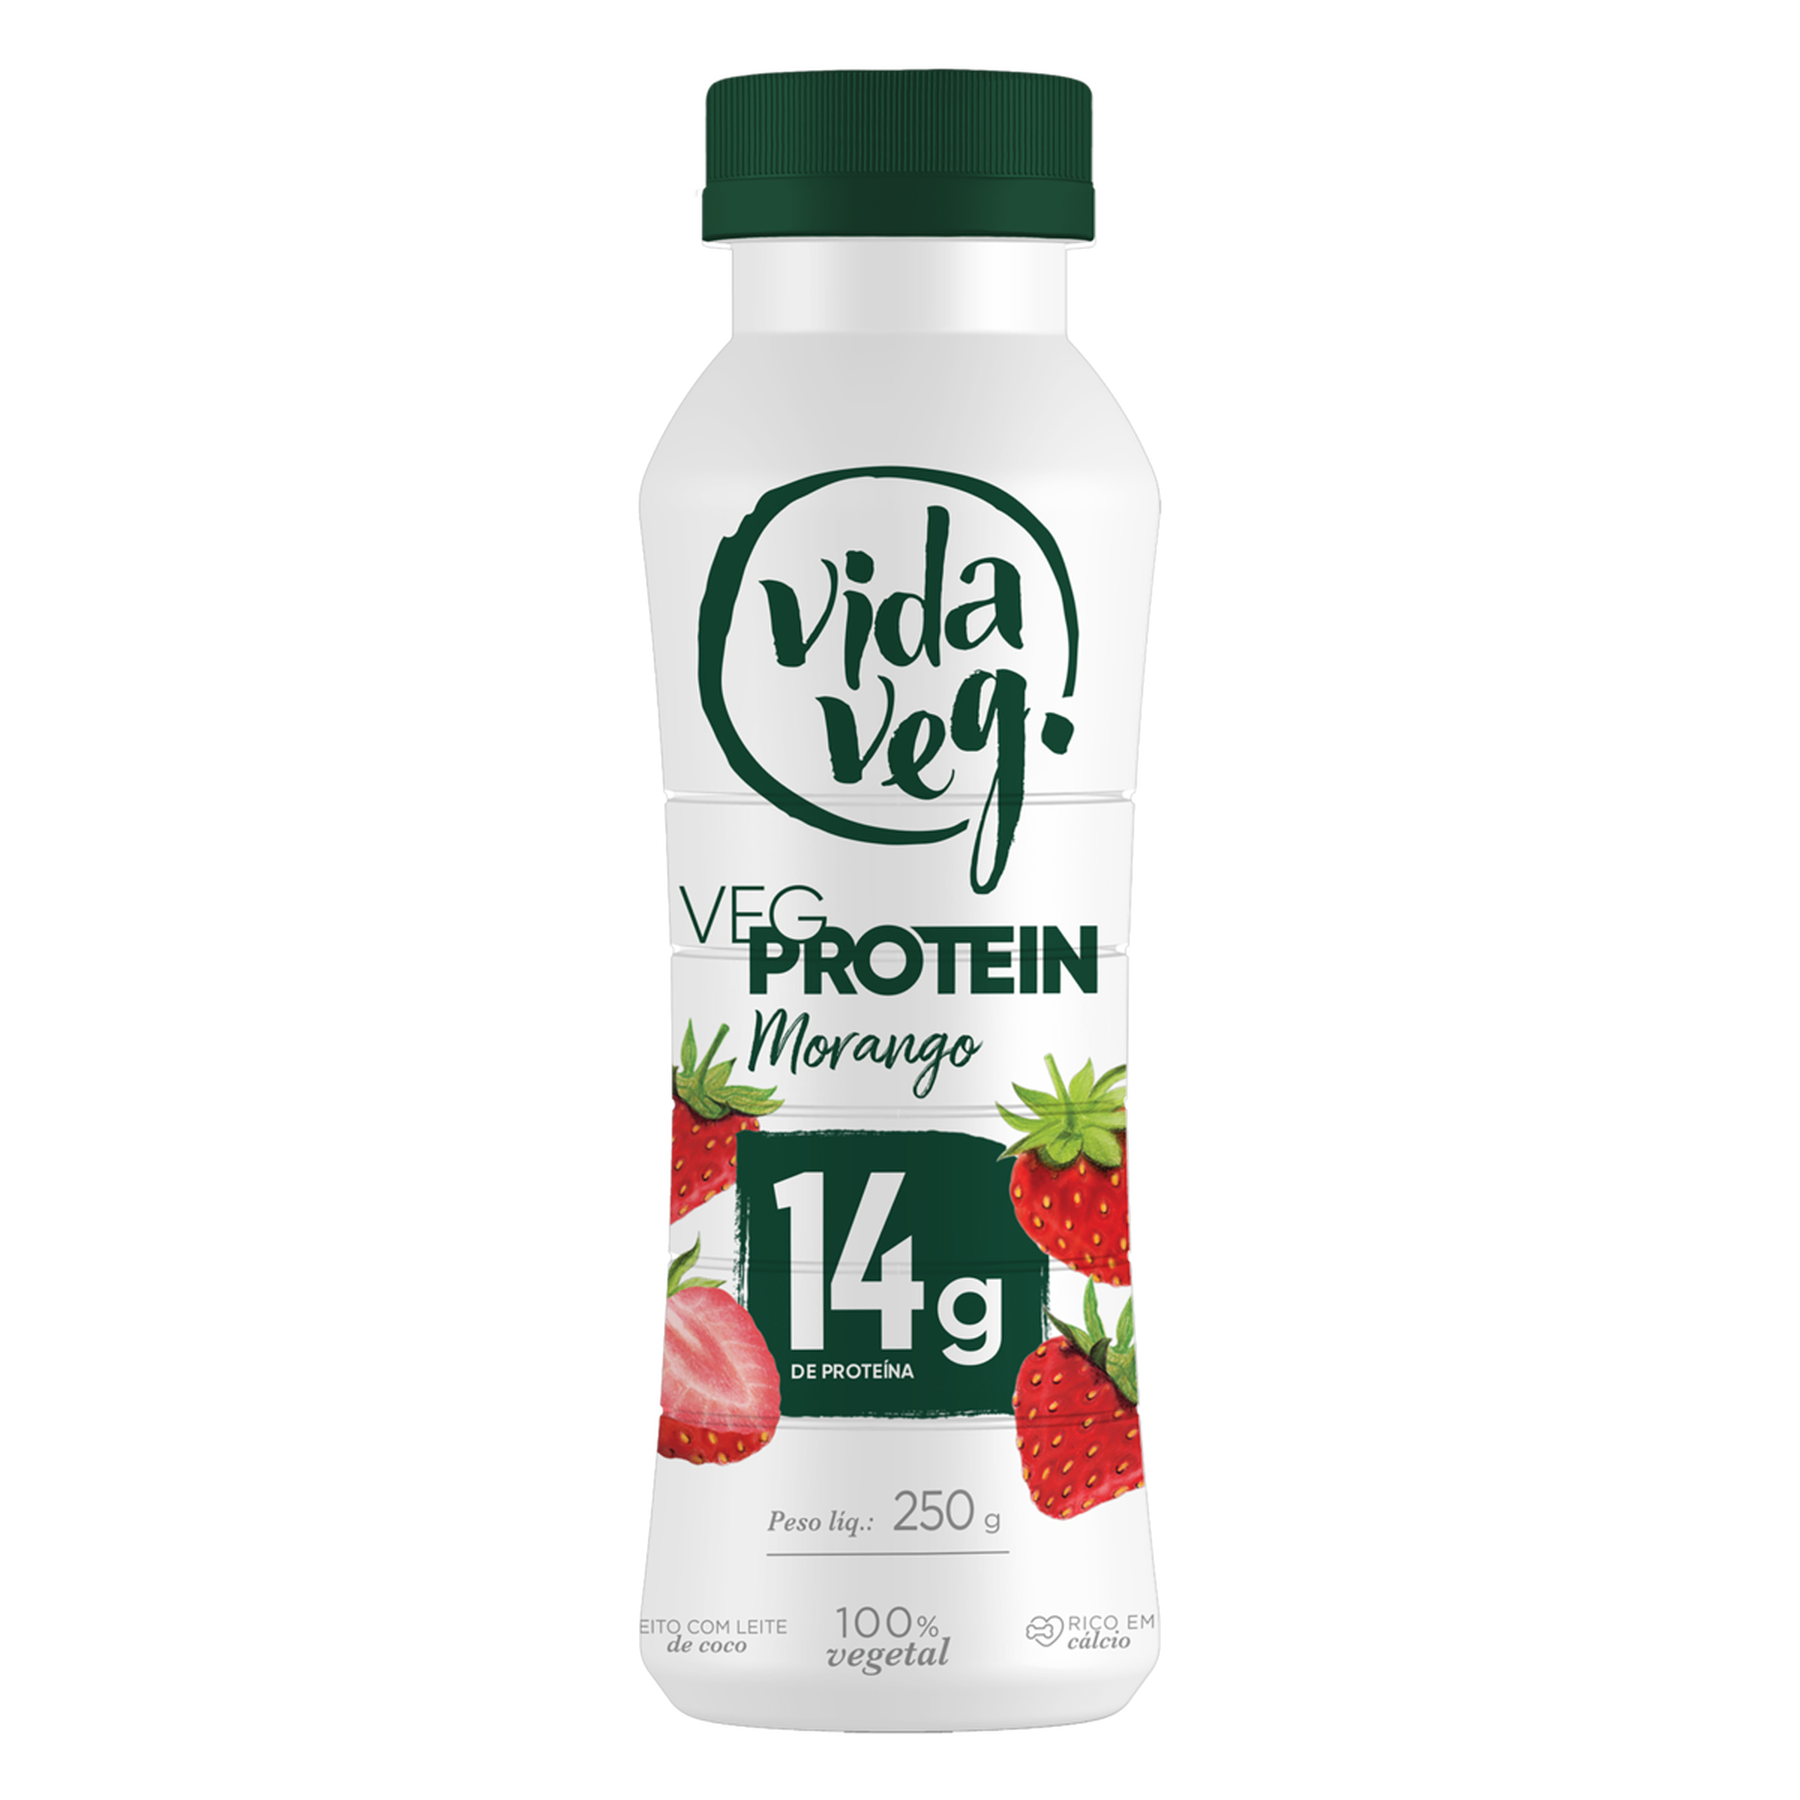 Iogurte Veg Protein Morango Vida Veg Frasco 250g